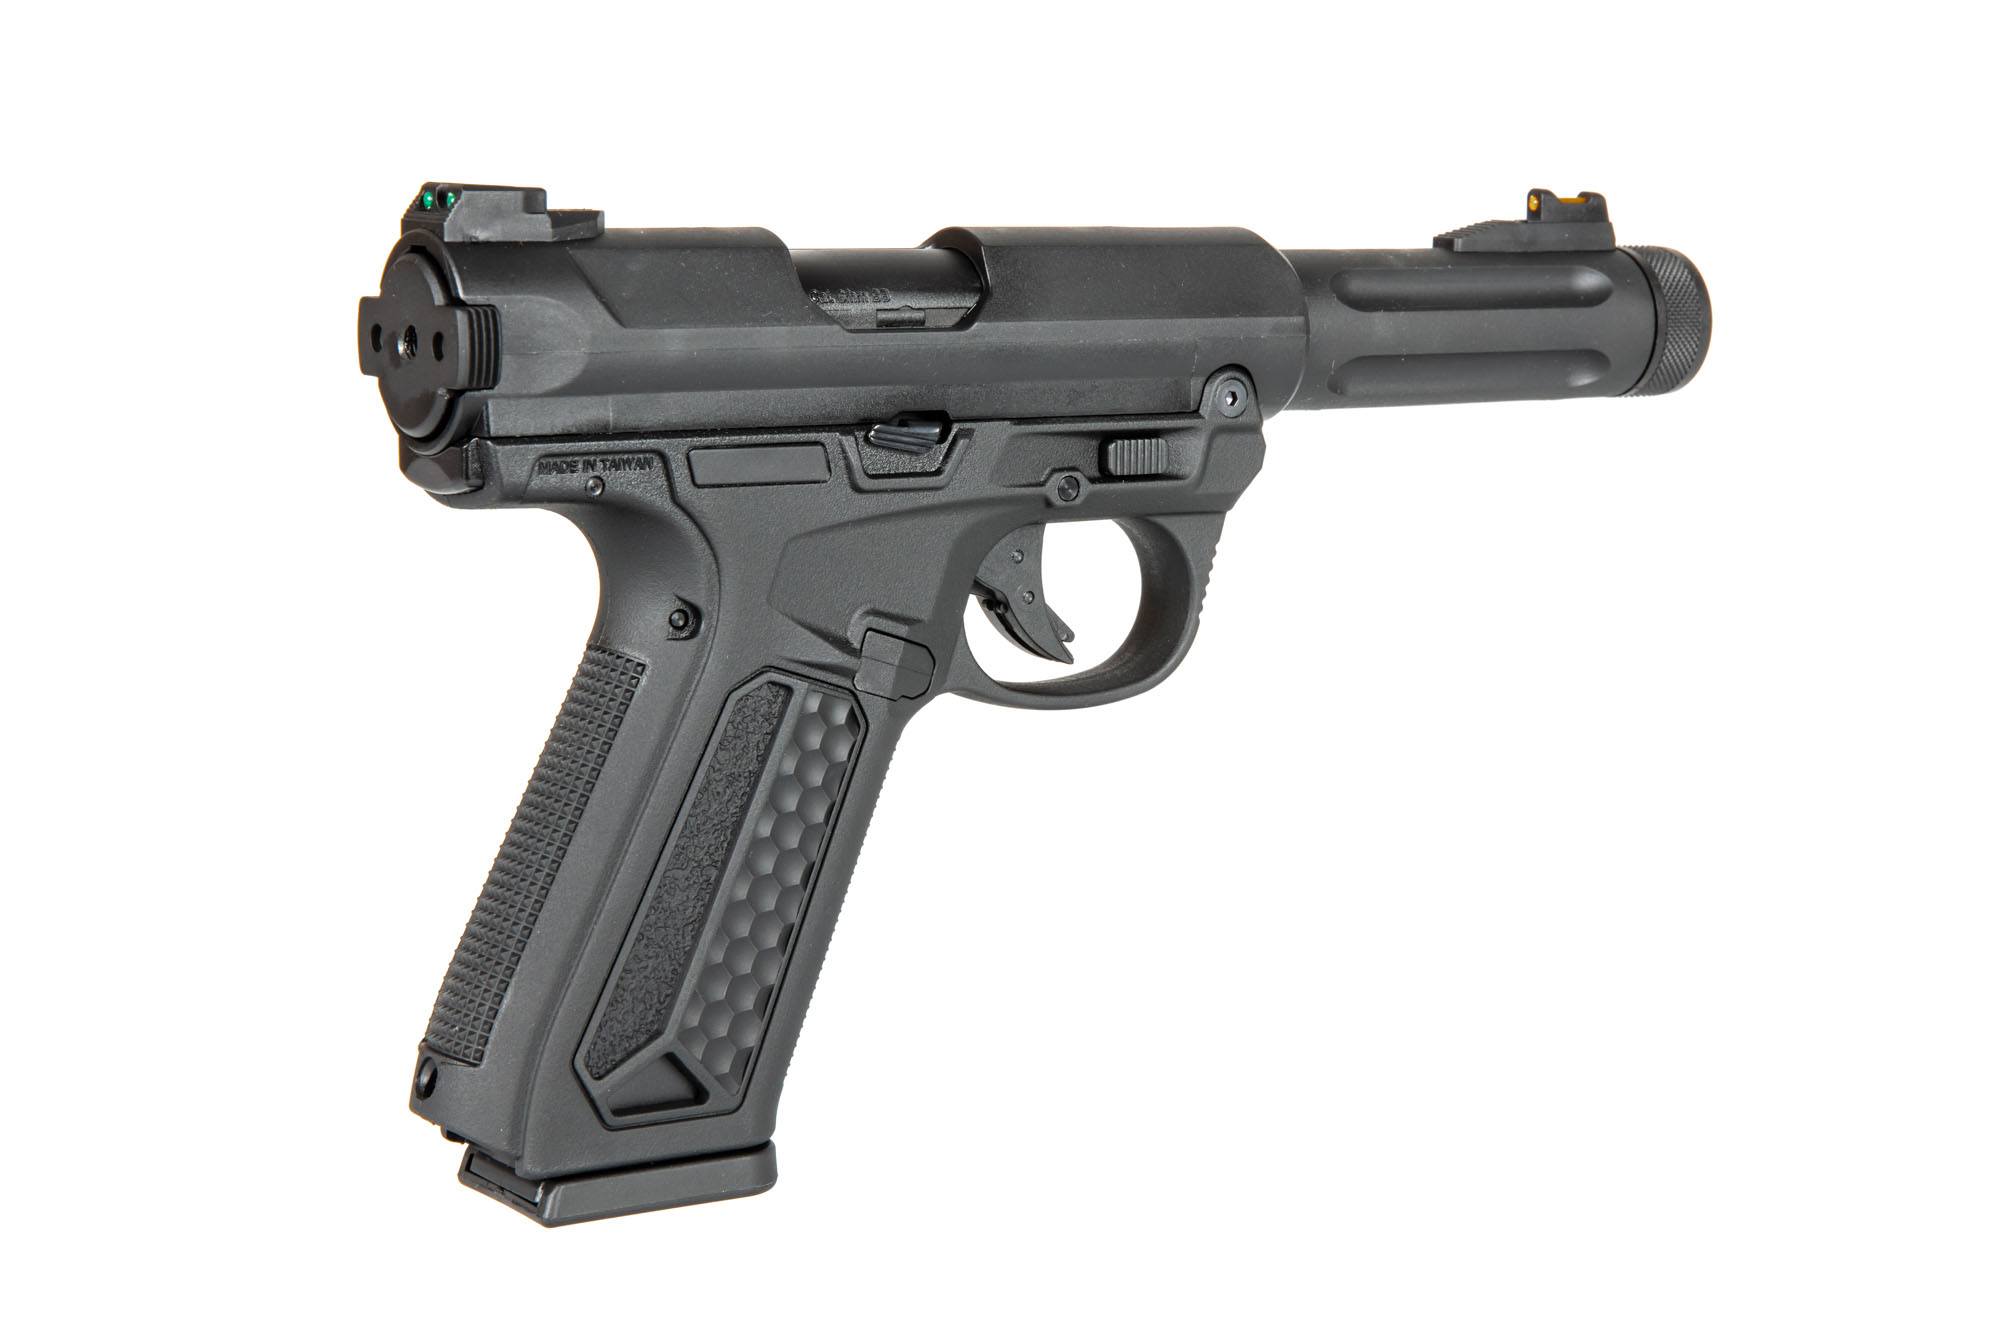 Pistola AAP01 Assassin completa/semi automatica – Nera